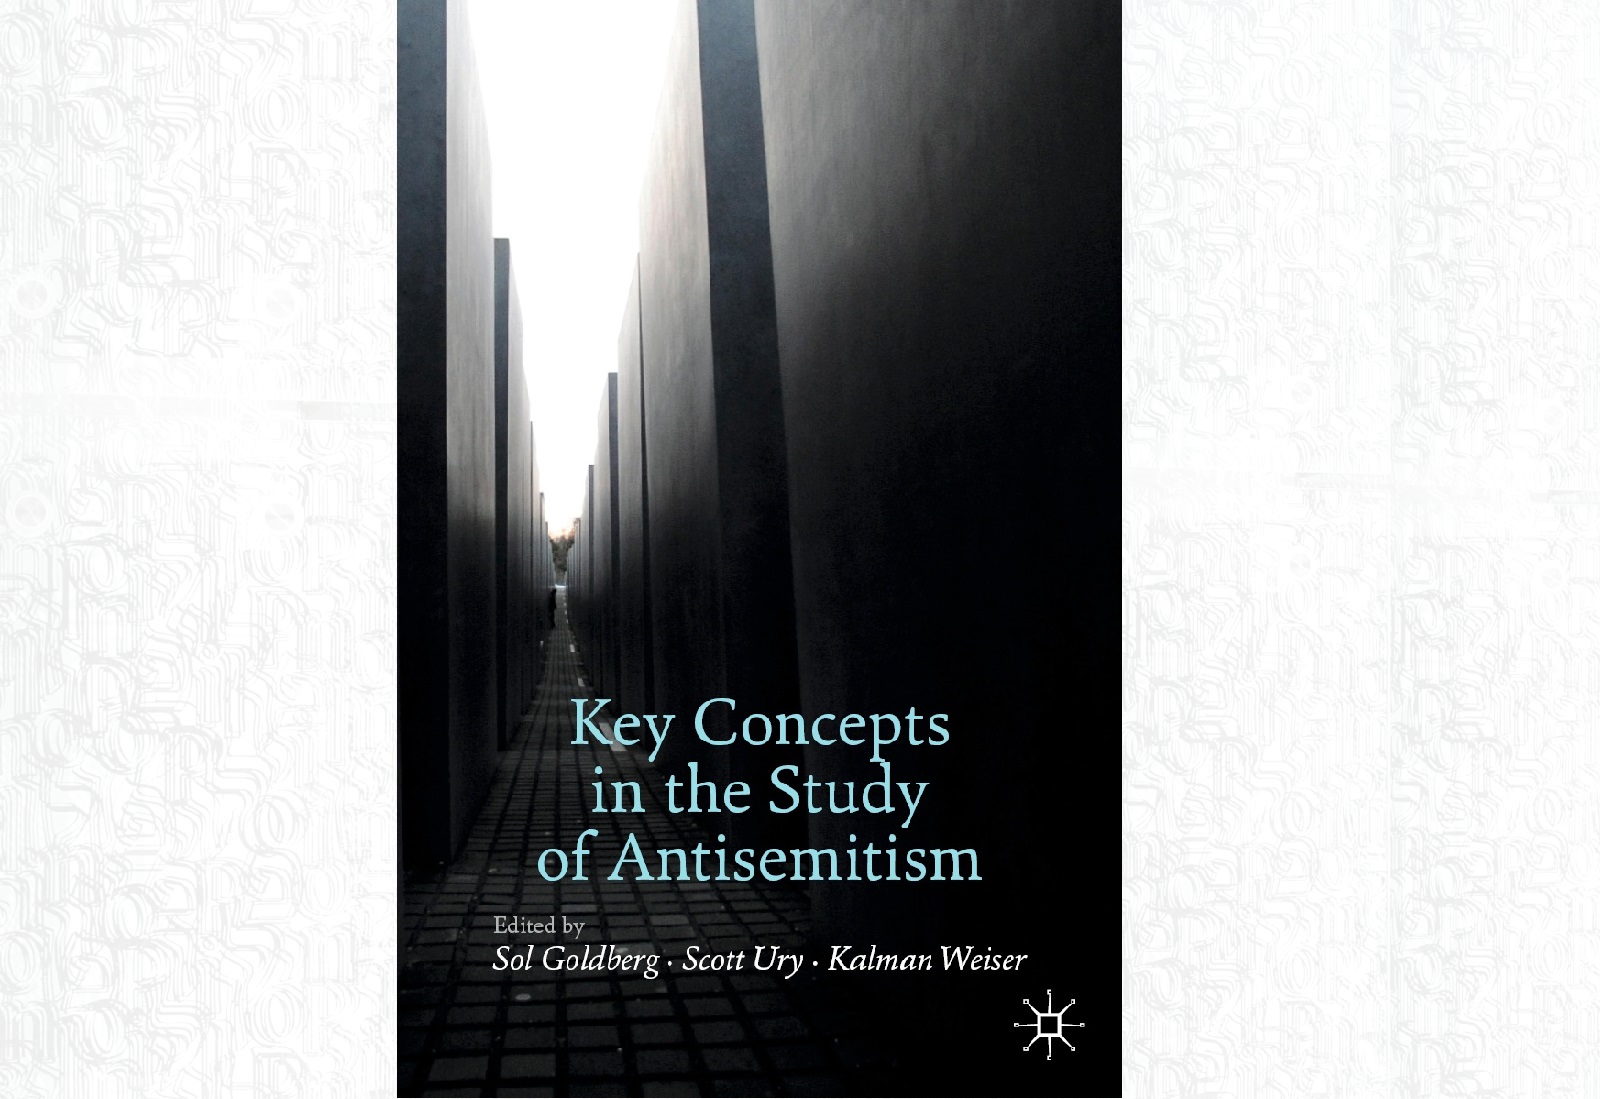 Okładka książki "Key concepts in the study of antisemitism"